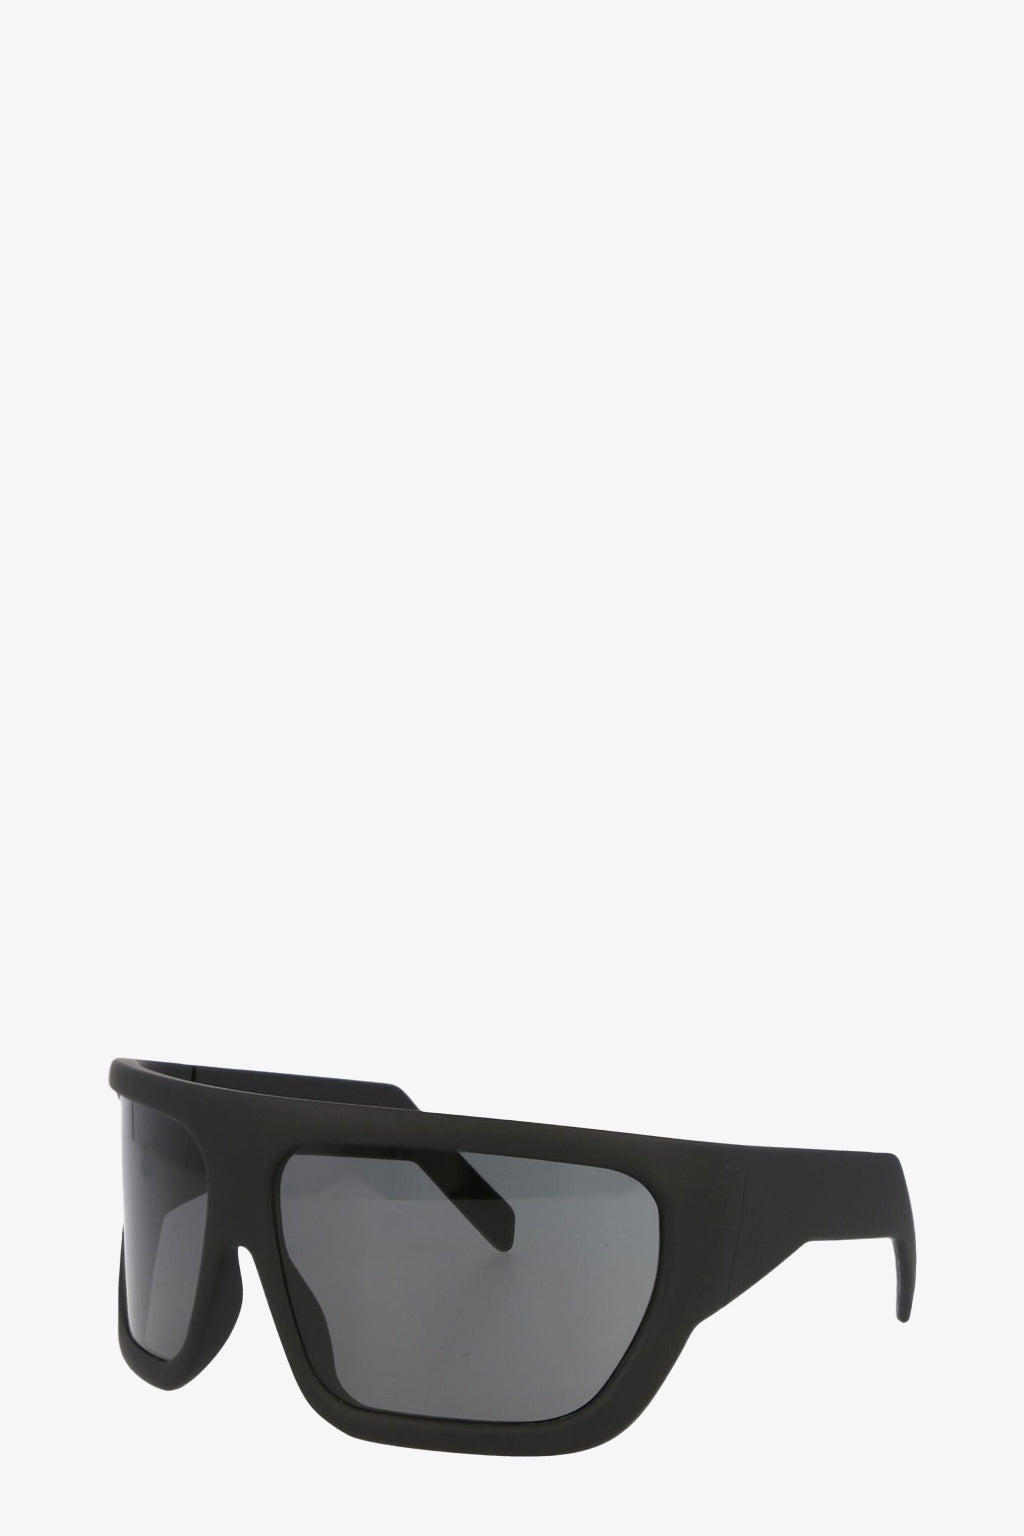 alt-image__Black-matt-acetate-sunglasses---Sunglasses-Davis